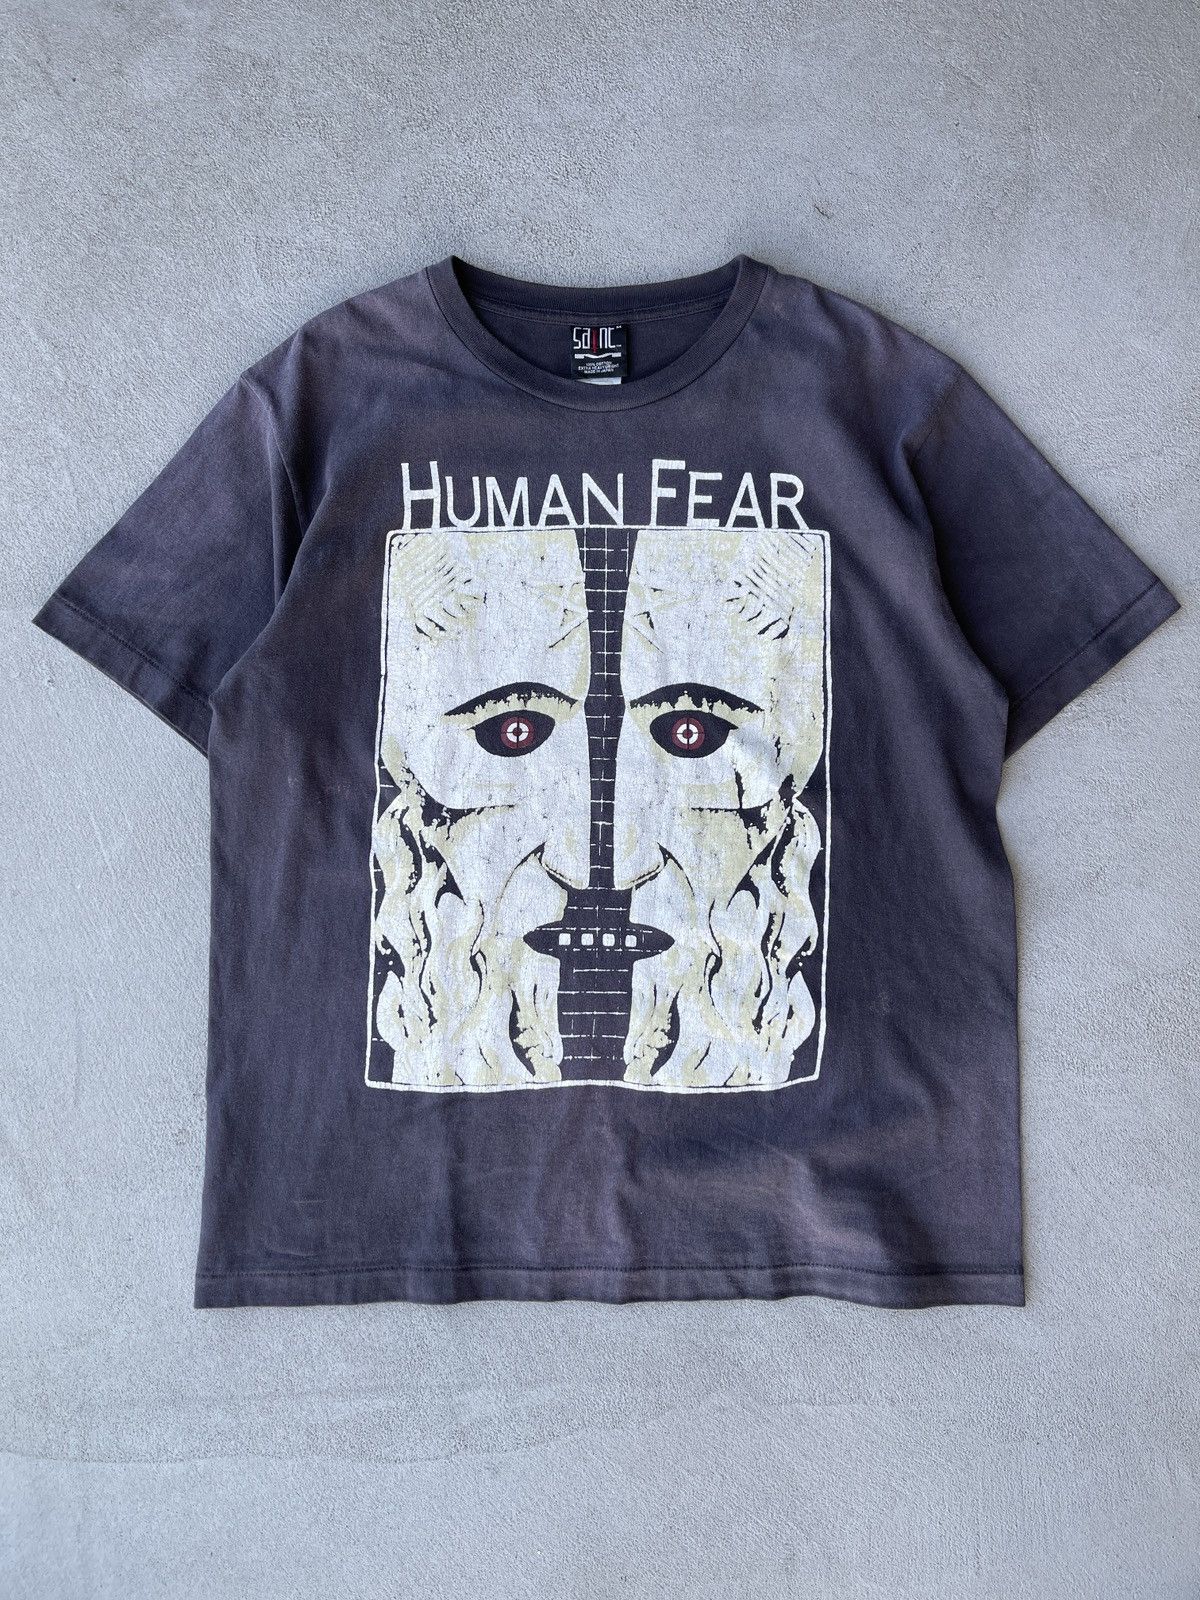 Japanese Brand - STEAL! 2010s Saint Michael Human Fear Tee (M) - 1